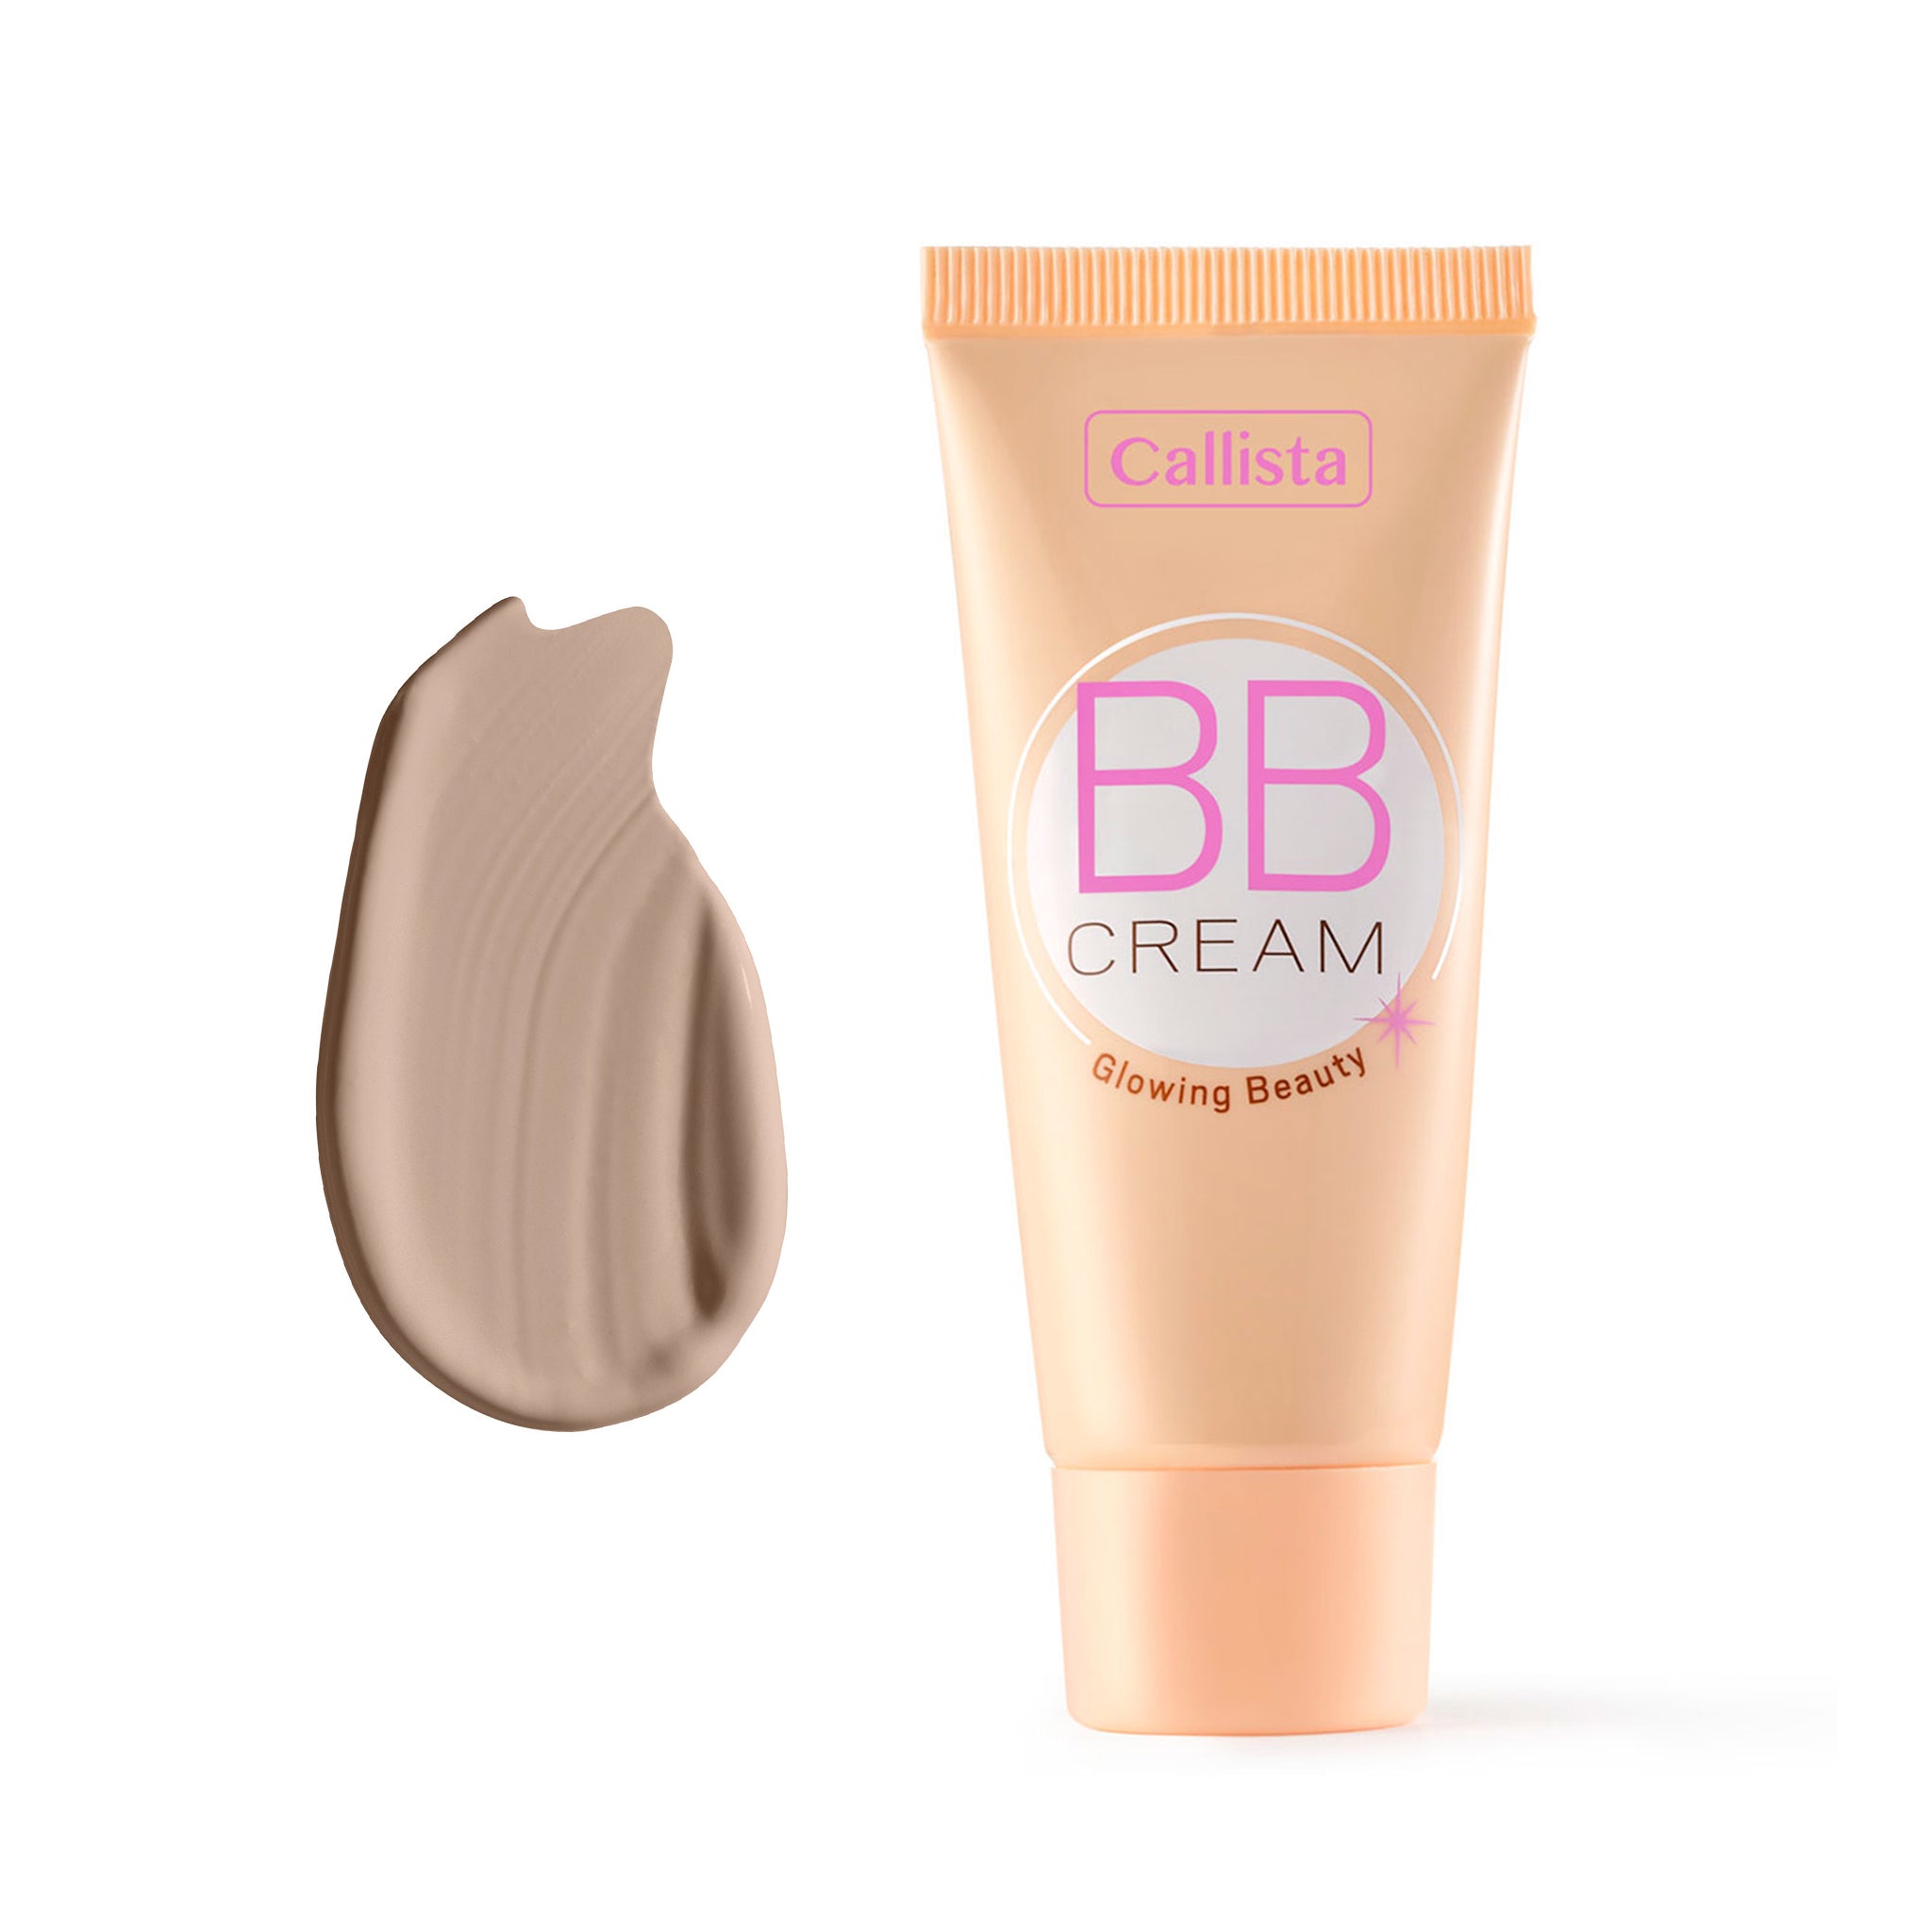 BB Cream Glowing Beauty 25ml 130